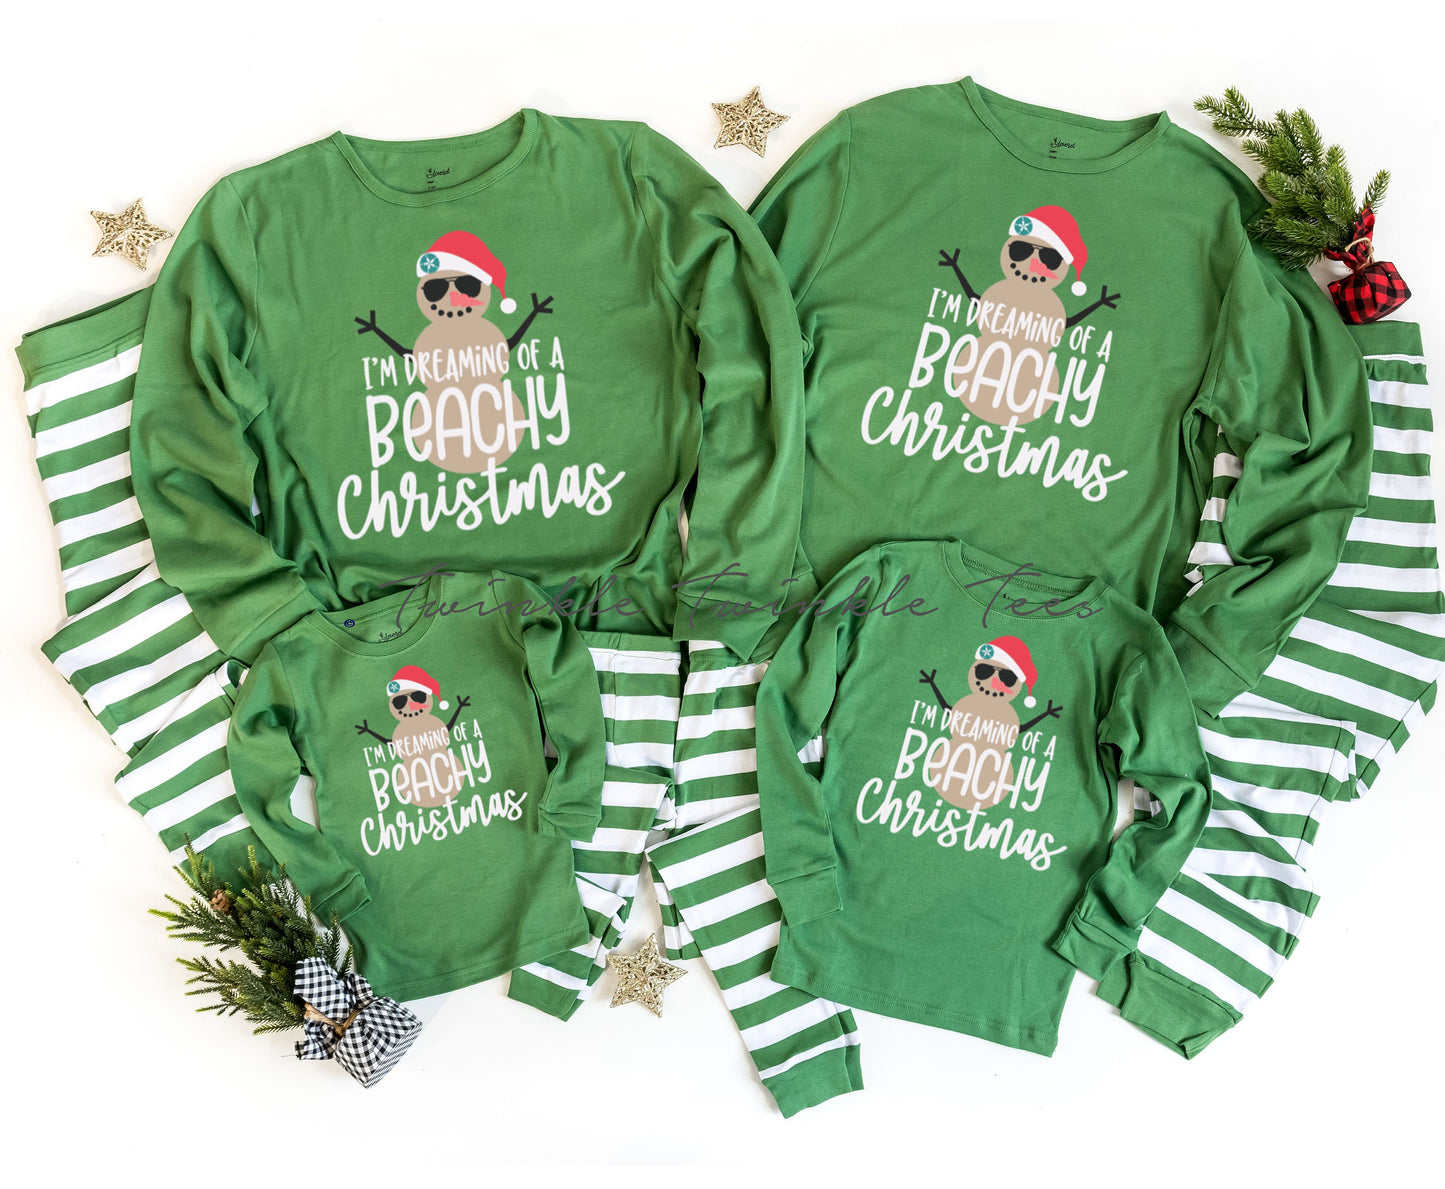 I'm Dreaming of a Beachy Christmas Green Top Striped Christmas Pajamas - beach christmas - nautical christmas - coastal christmas